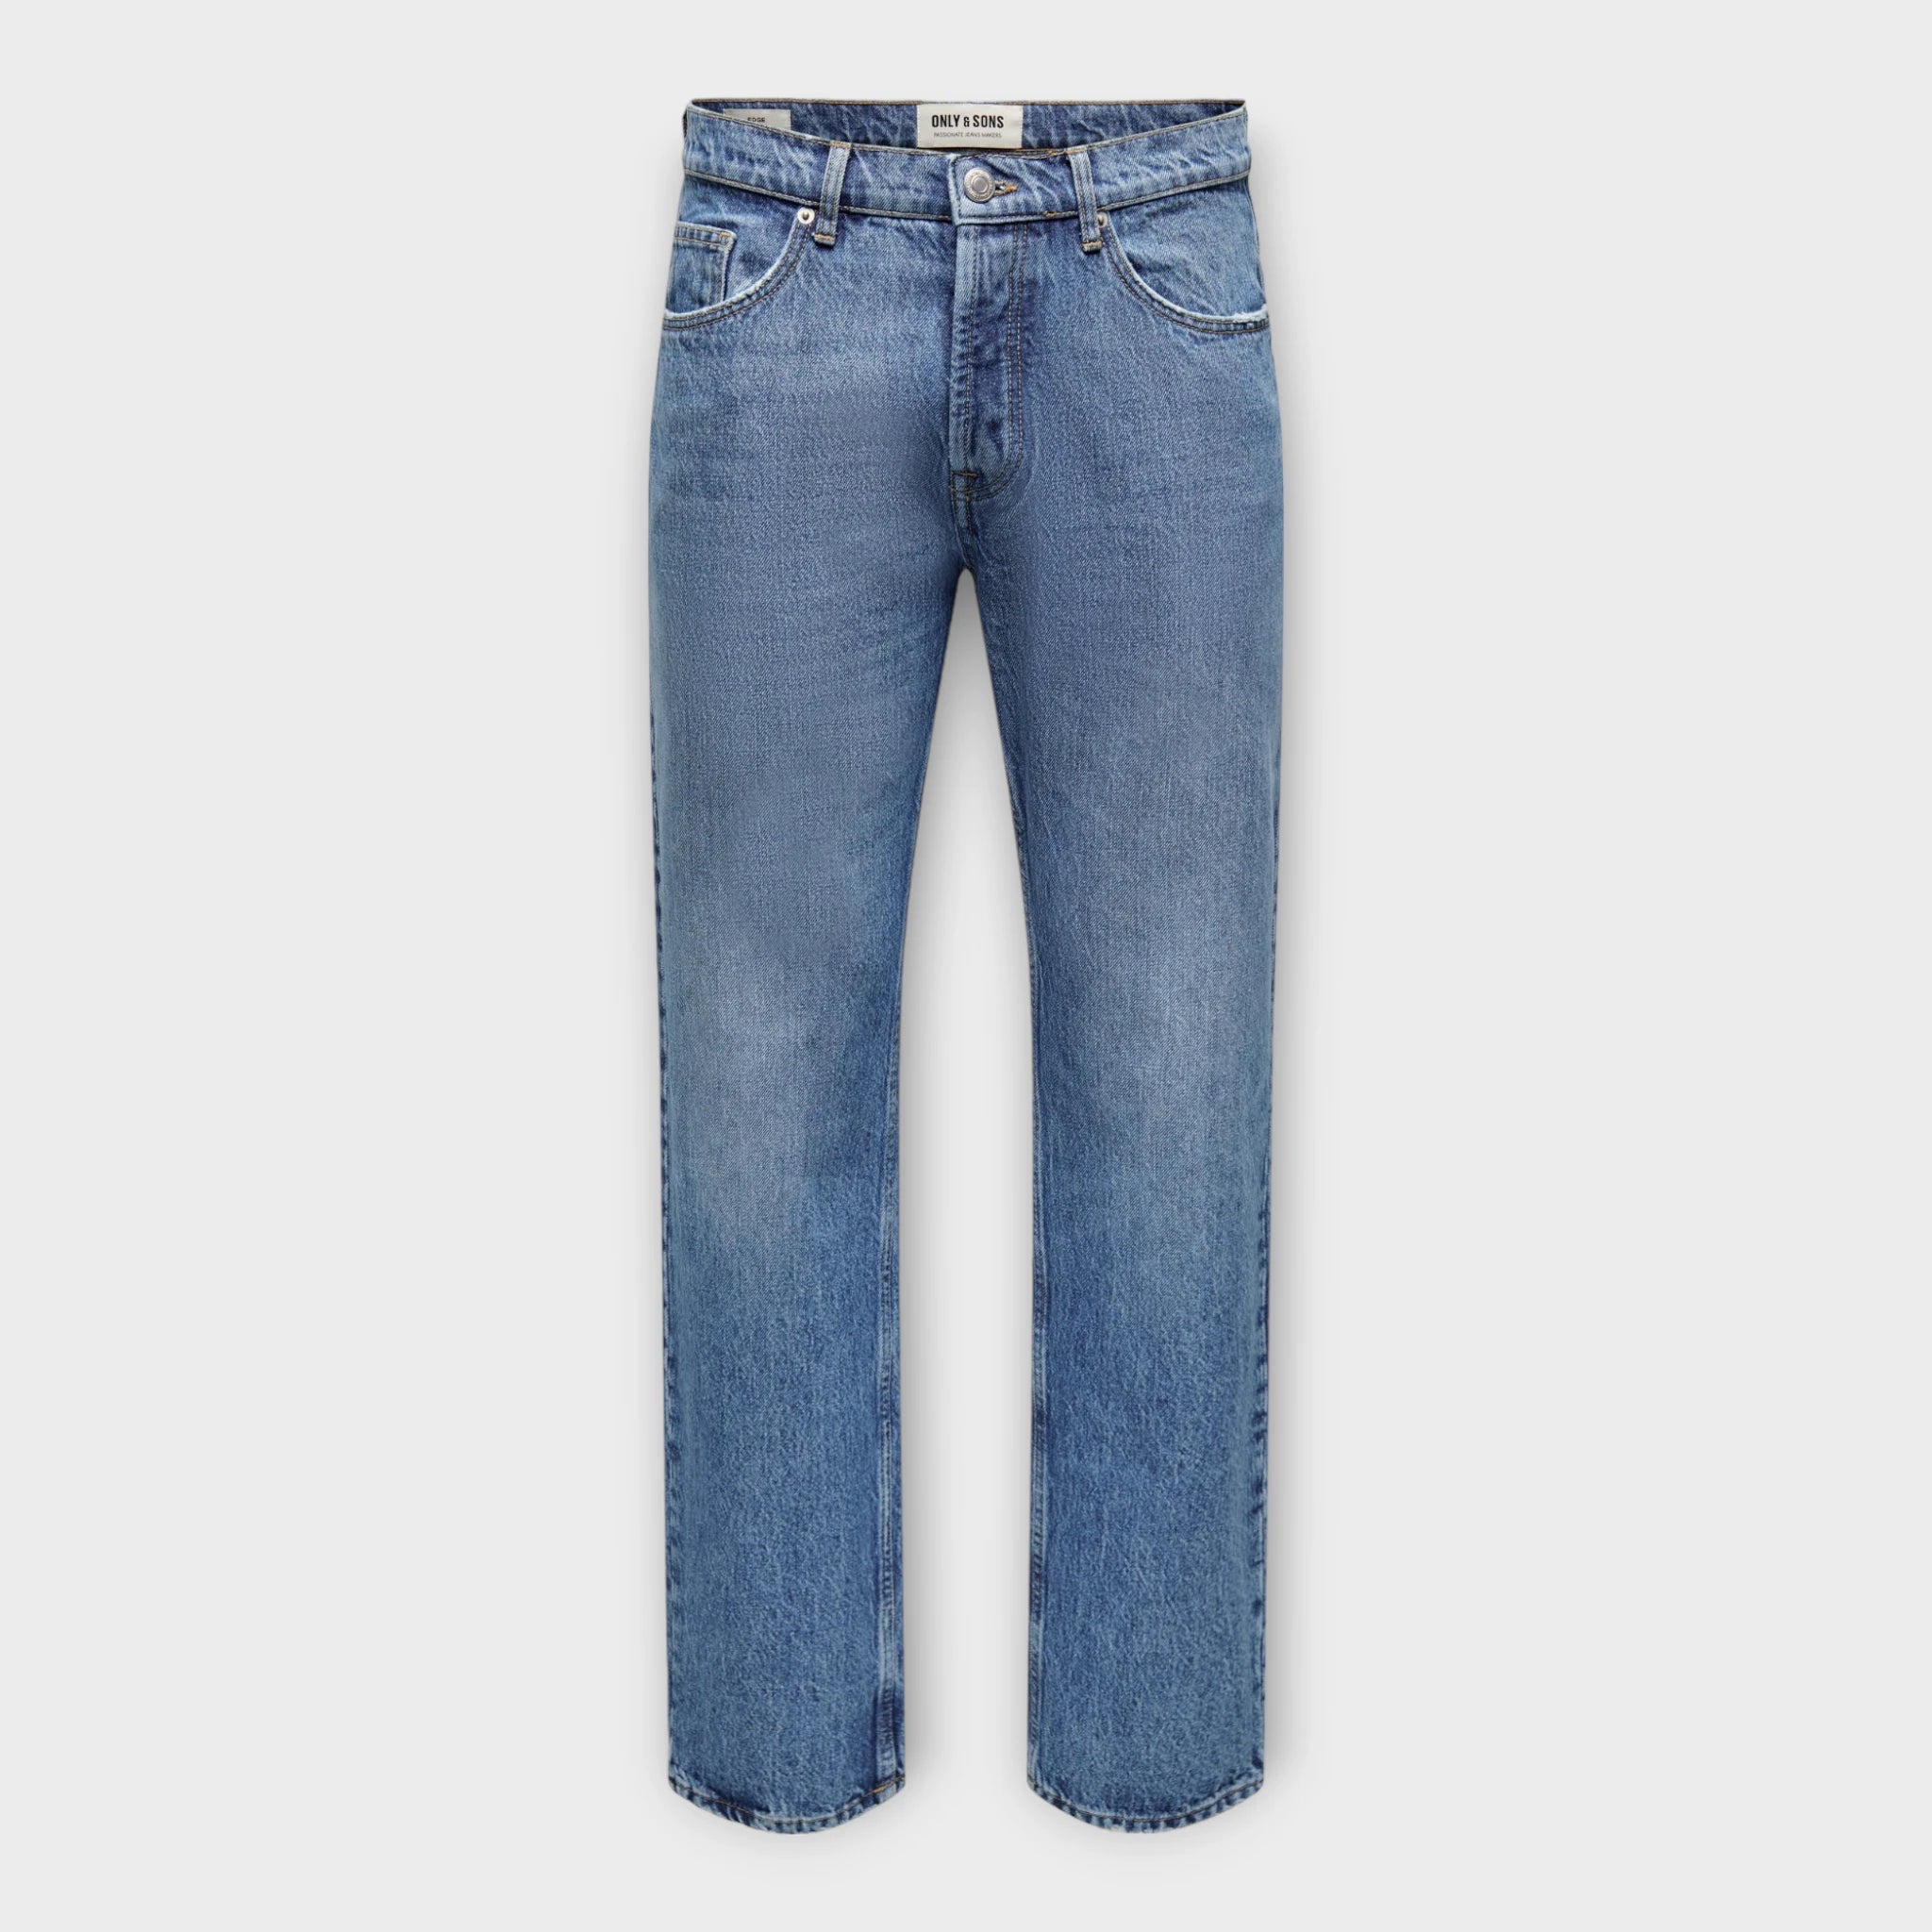 Edge Loose Mid.blue 4939 Dnm Jeans - Mid Blue Denim